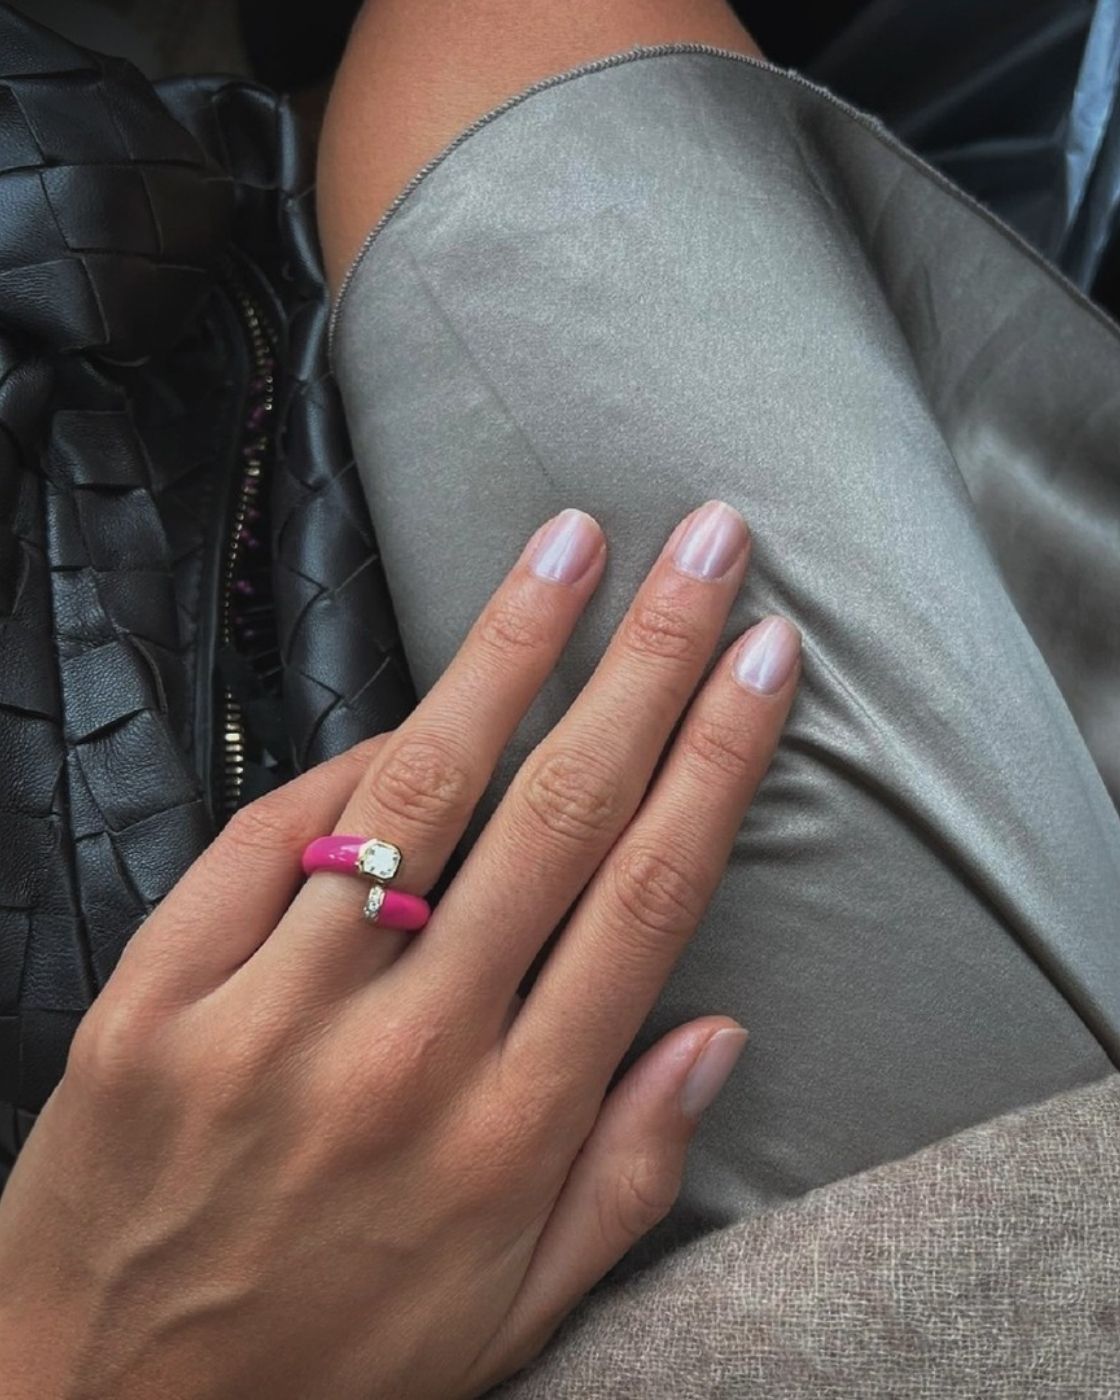 Toi Et Moi Pink Emaille Gelbgold Diamant Asscher Ring